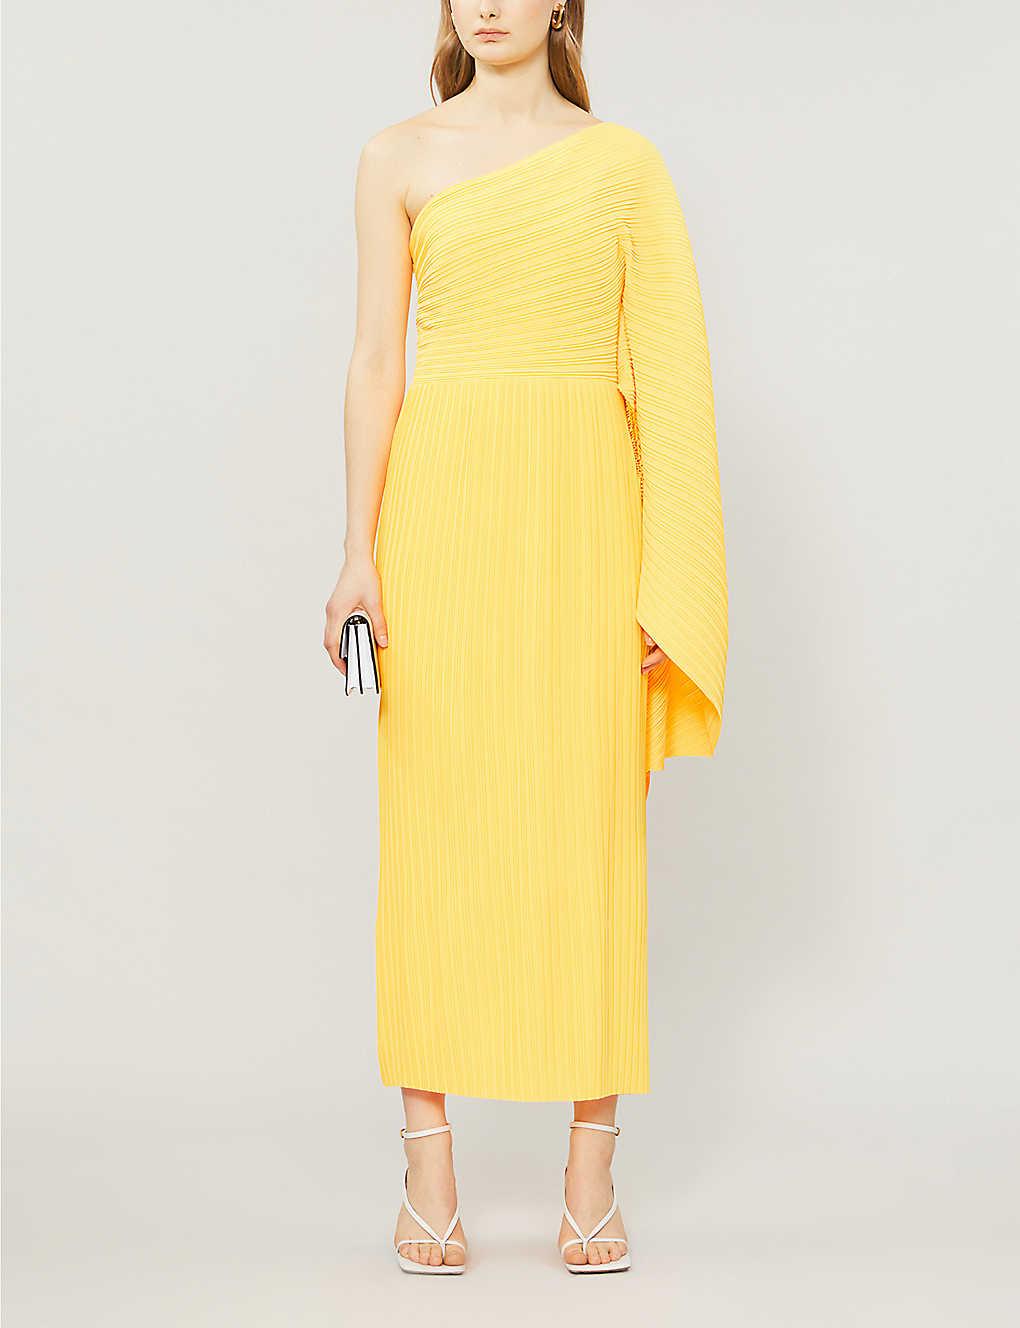 Solace London Lila Asymmetric Woven Midi Dress in Yellow | Lyst